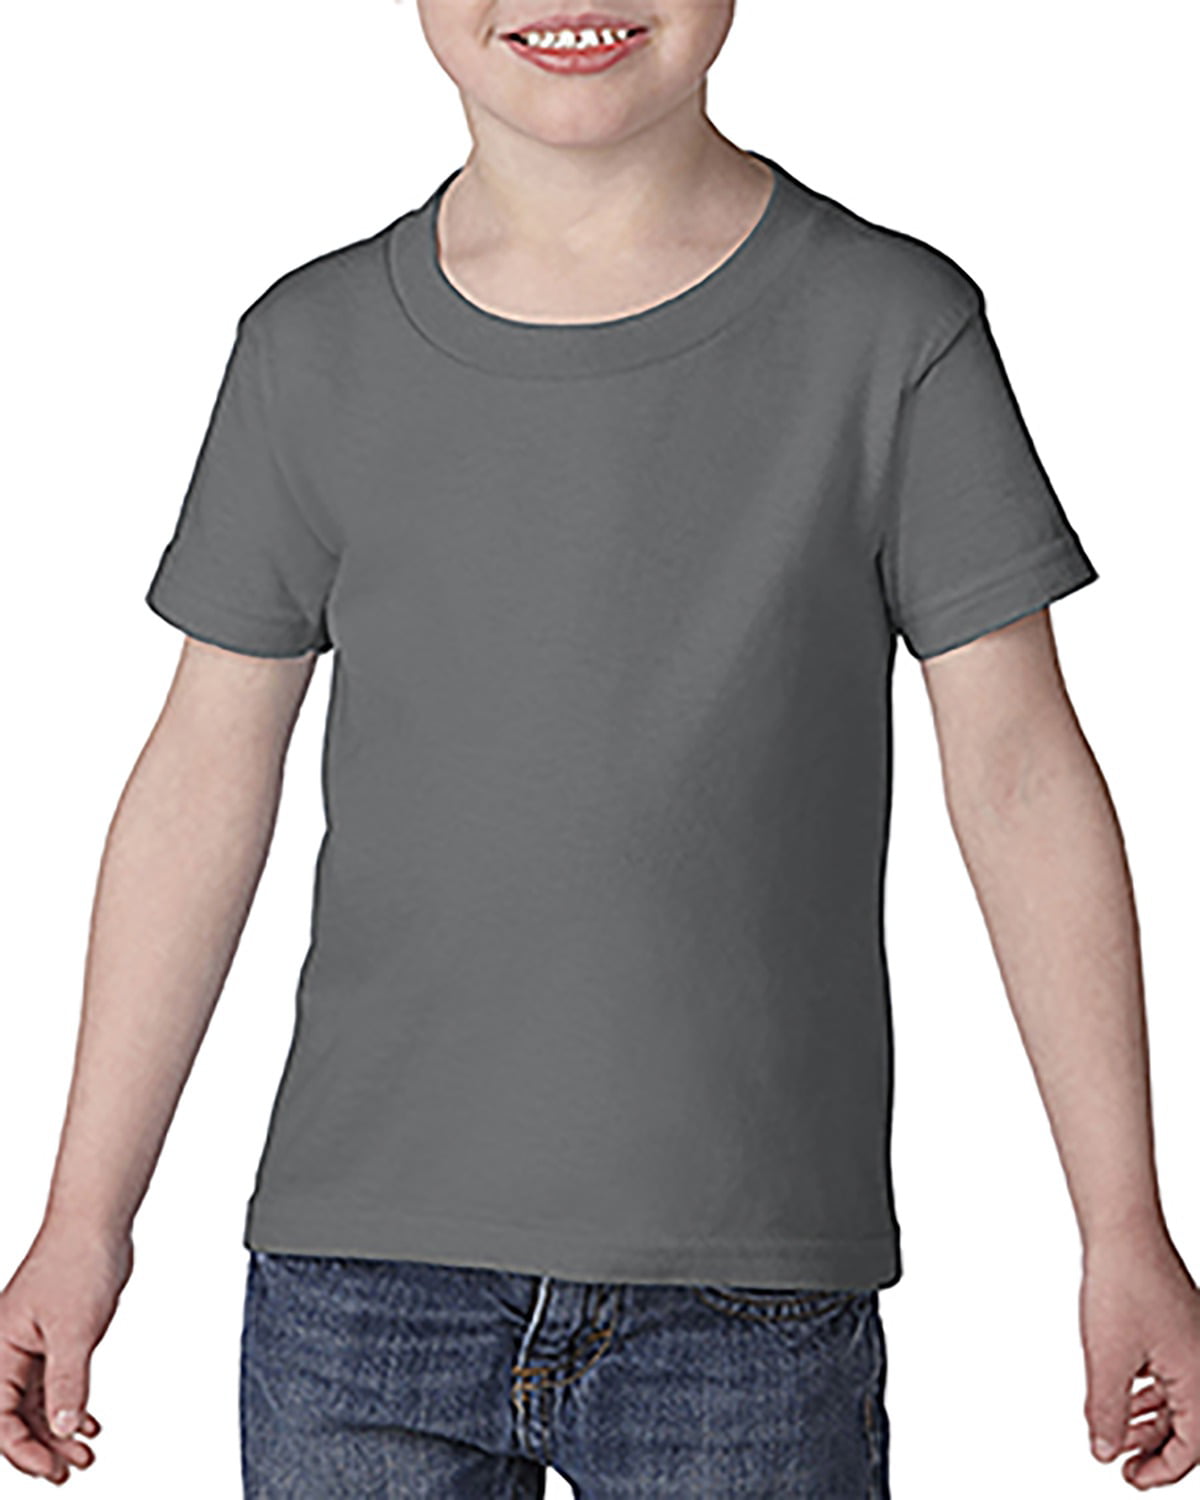 Gildan Unisex Kids Tees Softstyle 100% Cotton School Youth Sports Kids T-Shirt